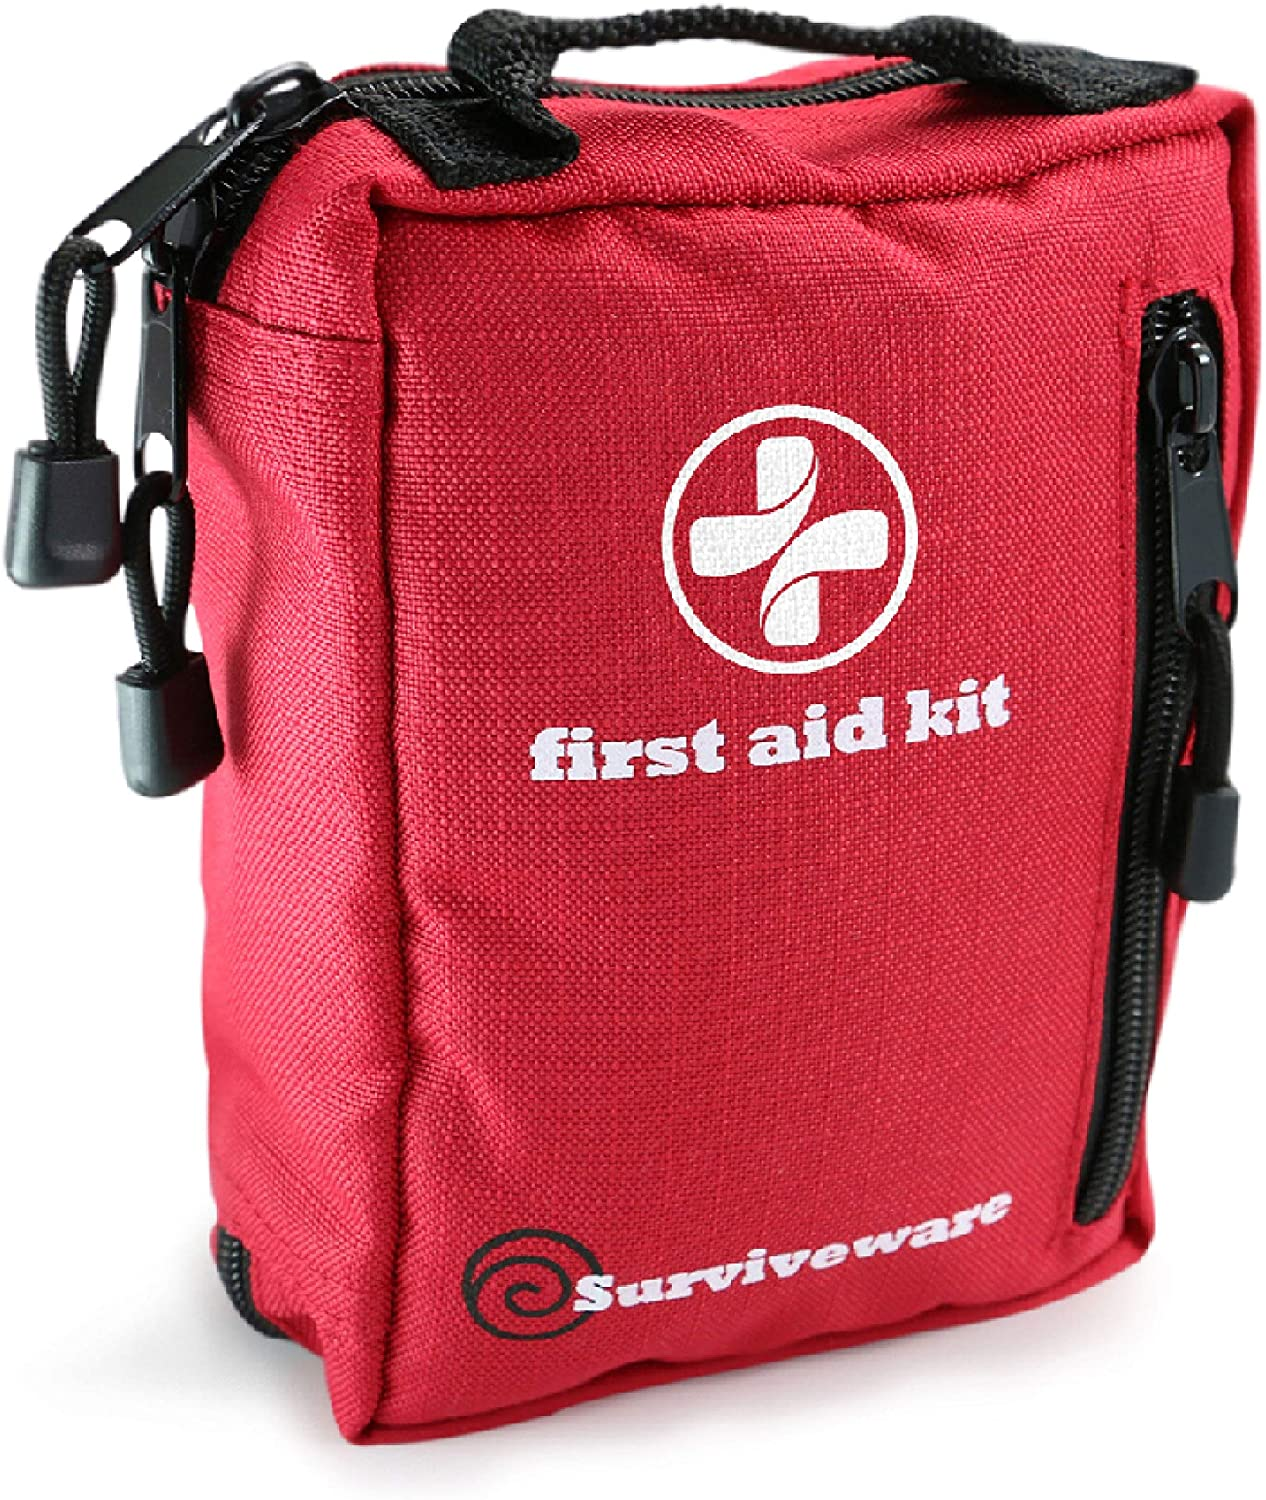 Surviveware Comprehensive Premium First Aid Kit Emergency Medical